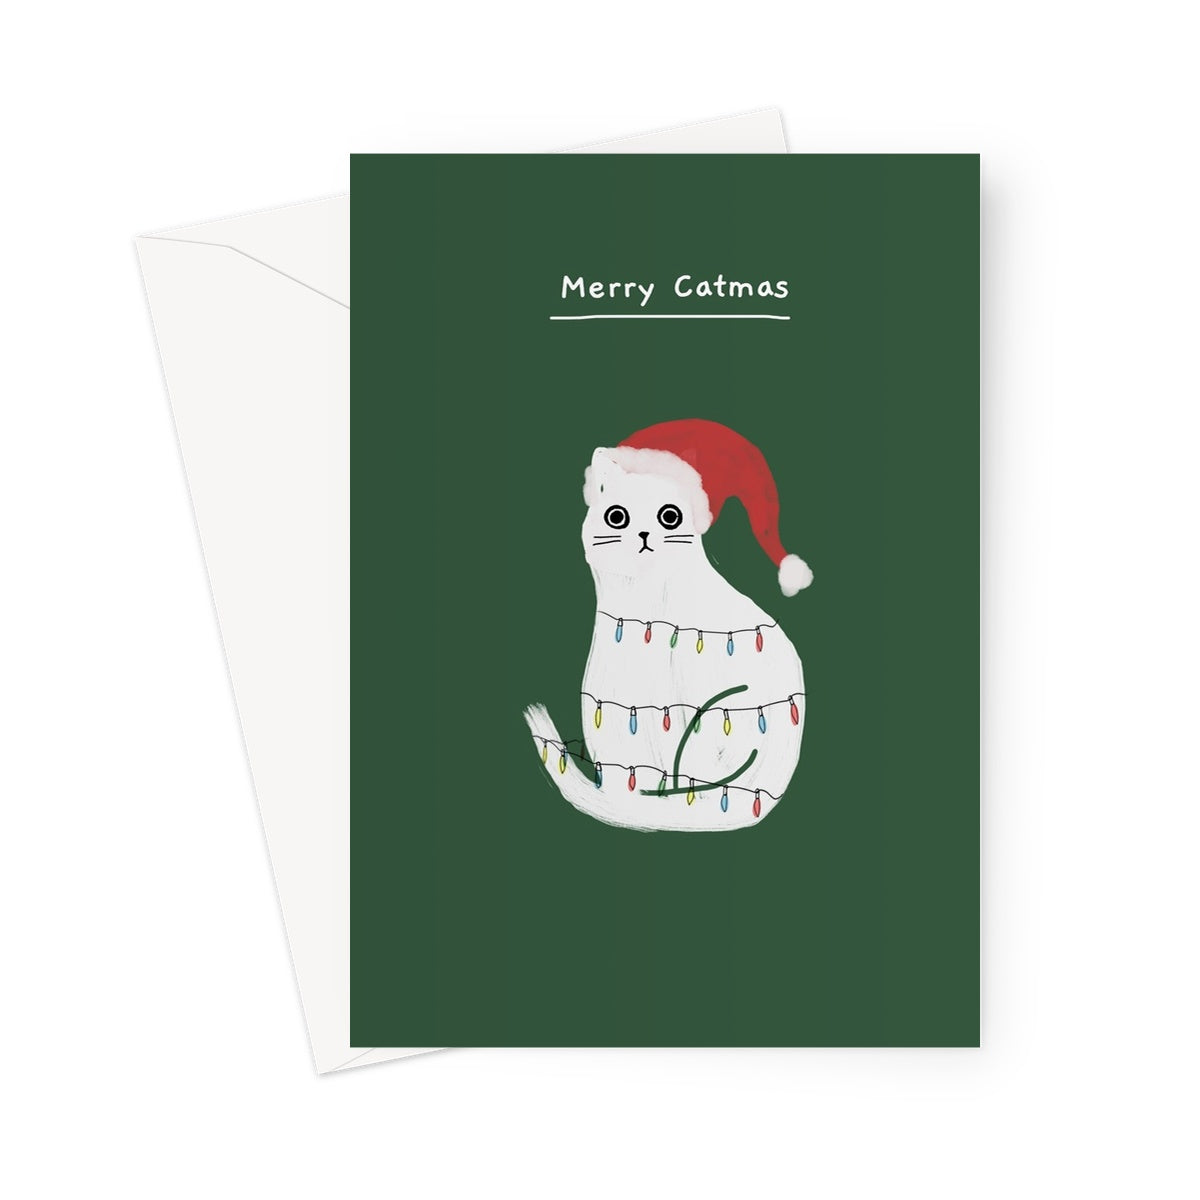 Merry Catmas - Christmas Card